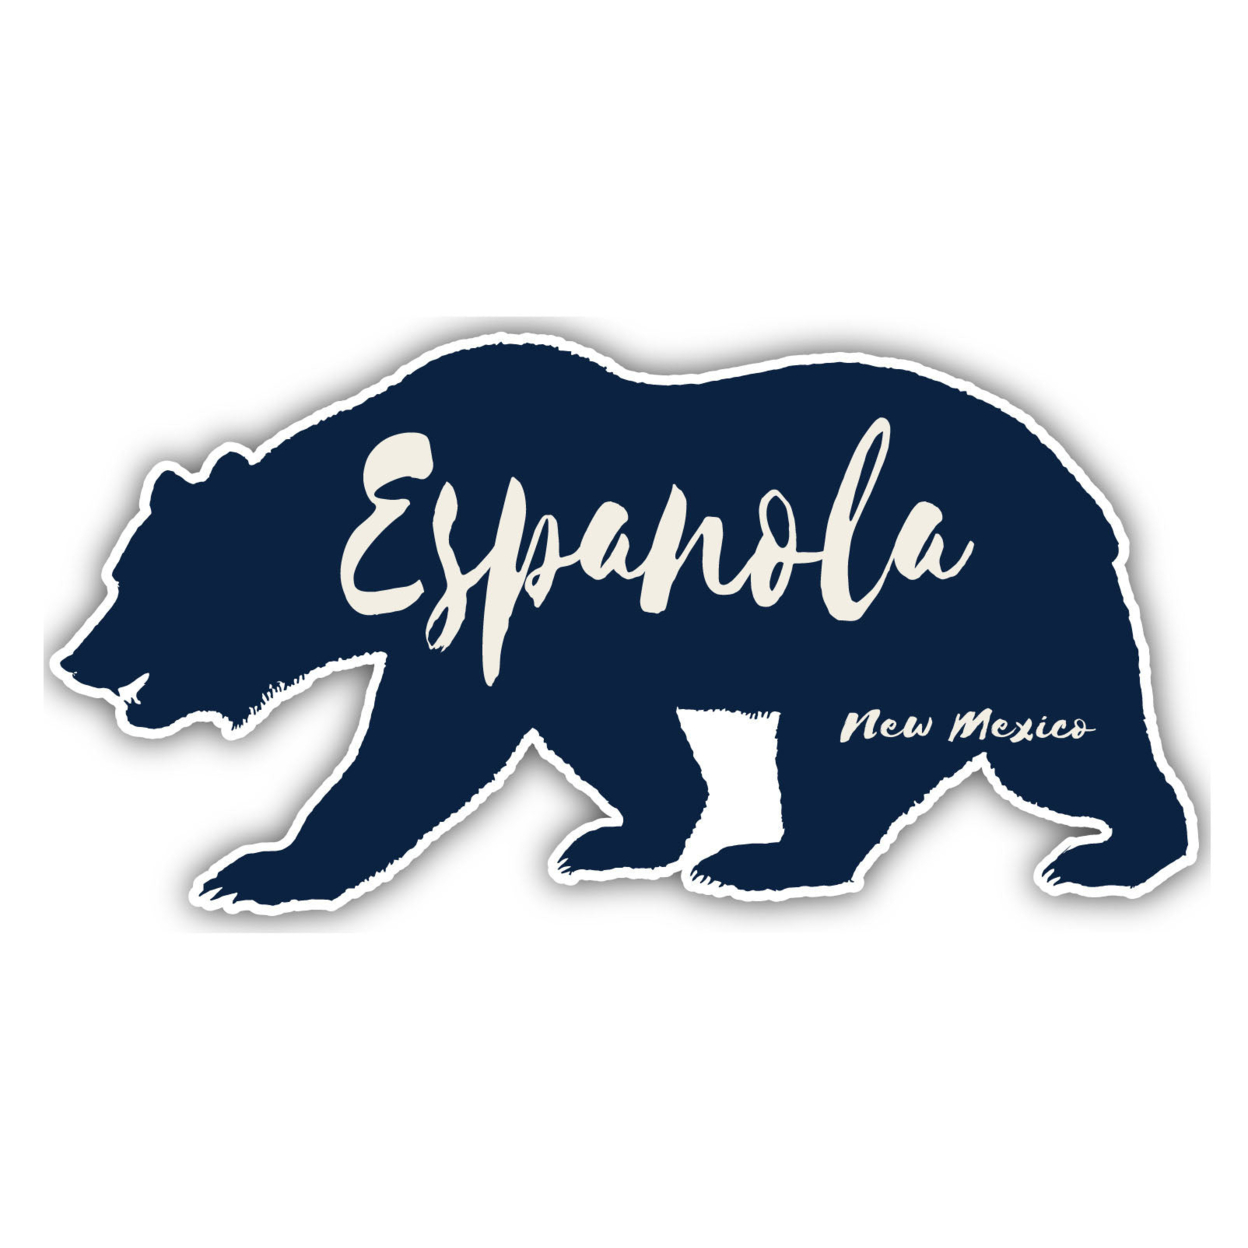 Espanola New Mexico Souvenir Decorative Stickers (Choose Theme And Size) - Single Unit, 4-Inch, Bear